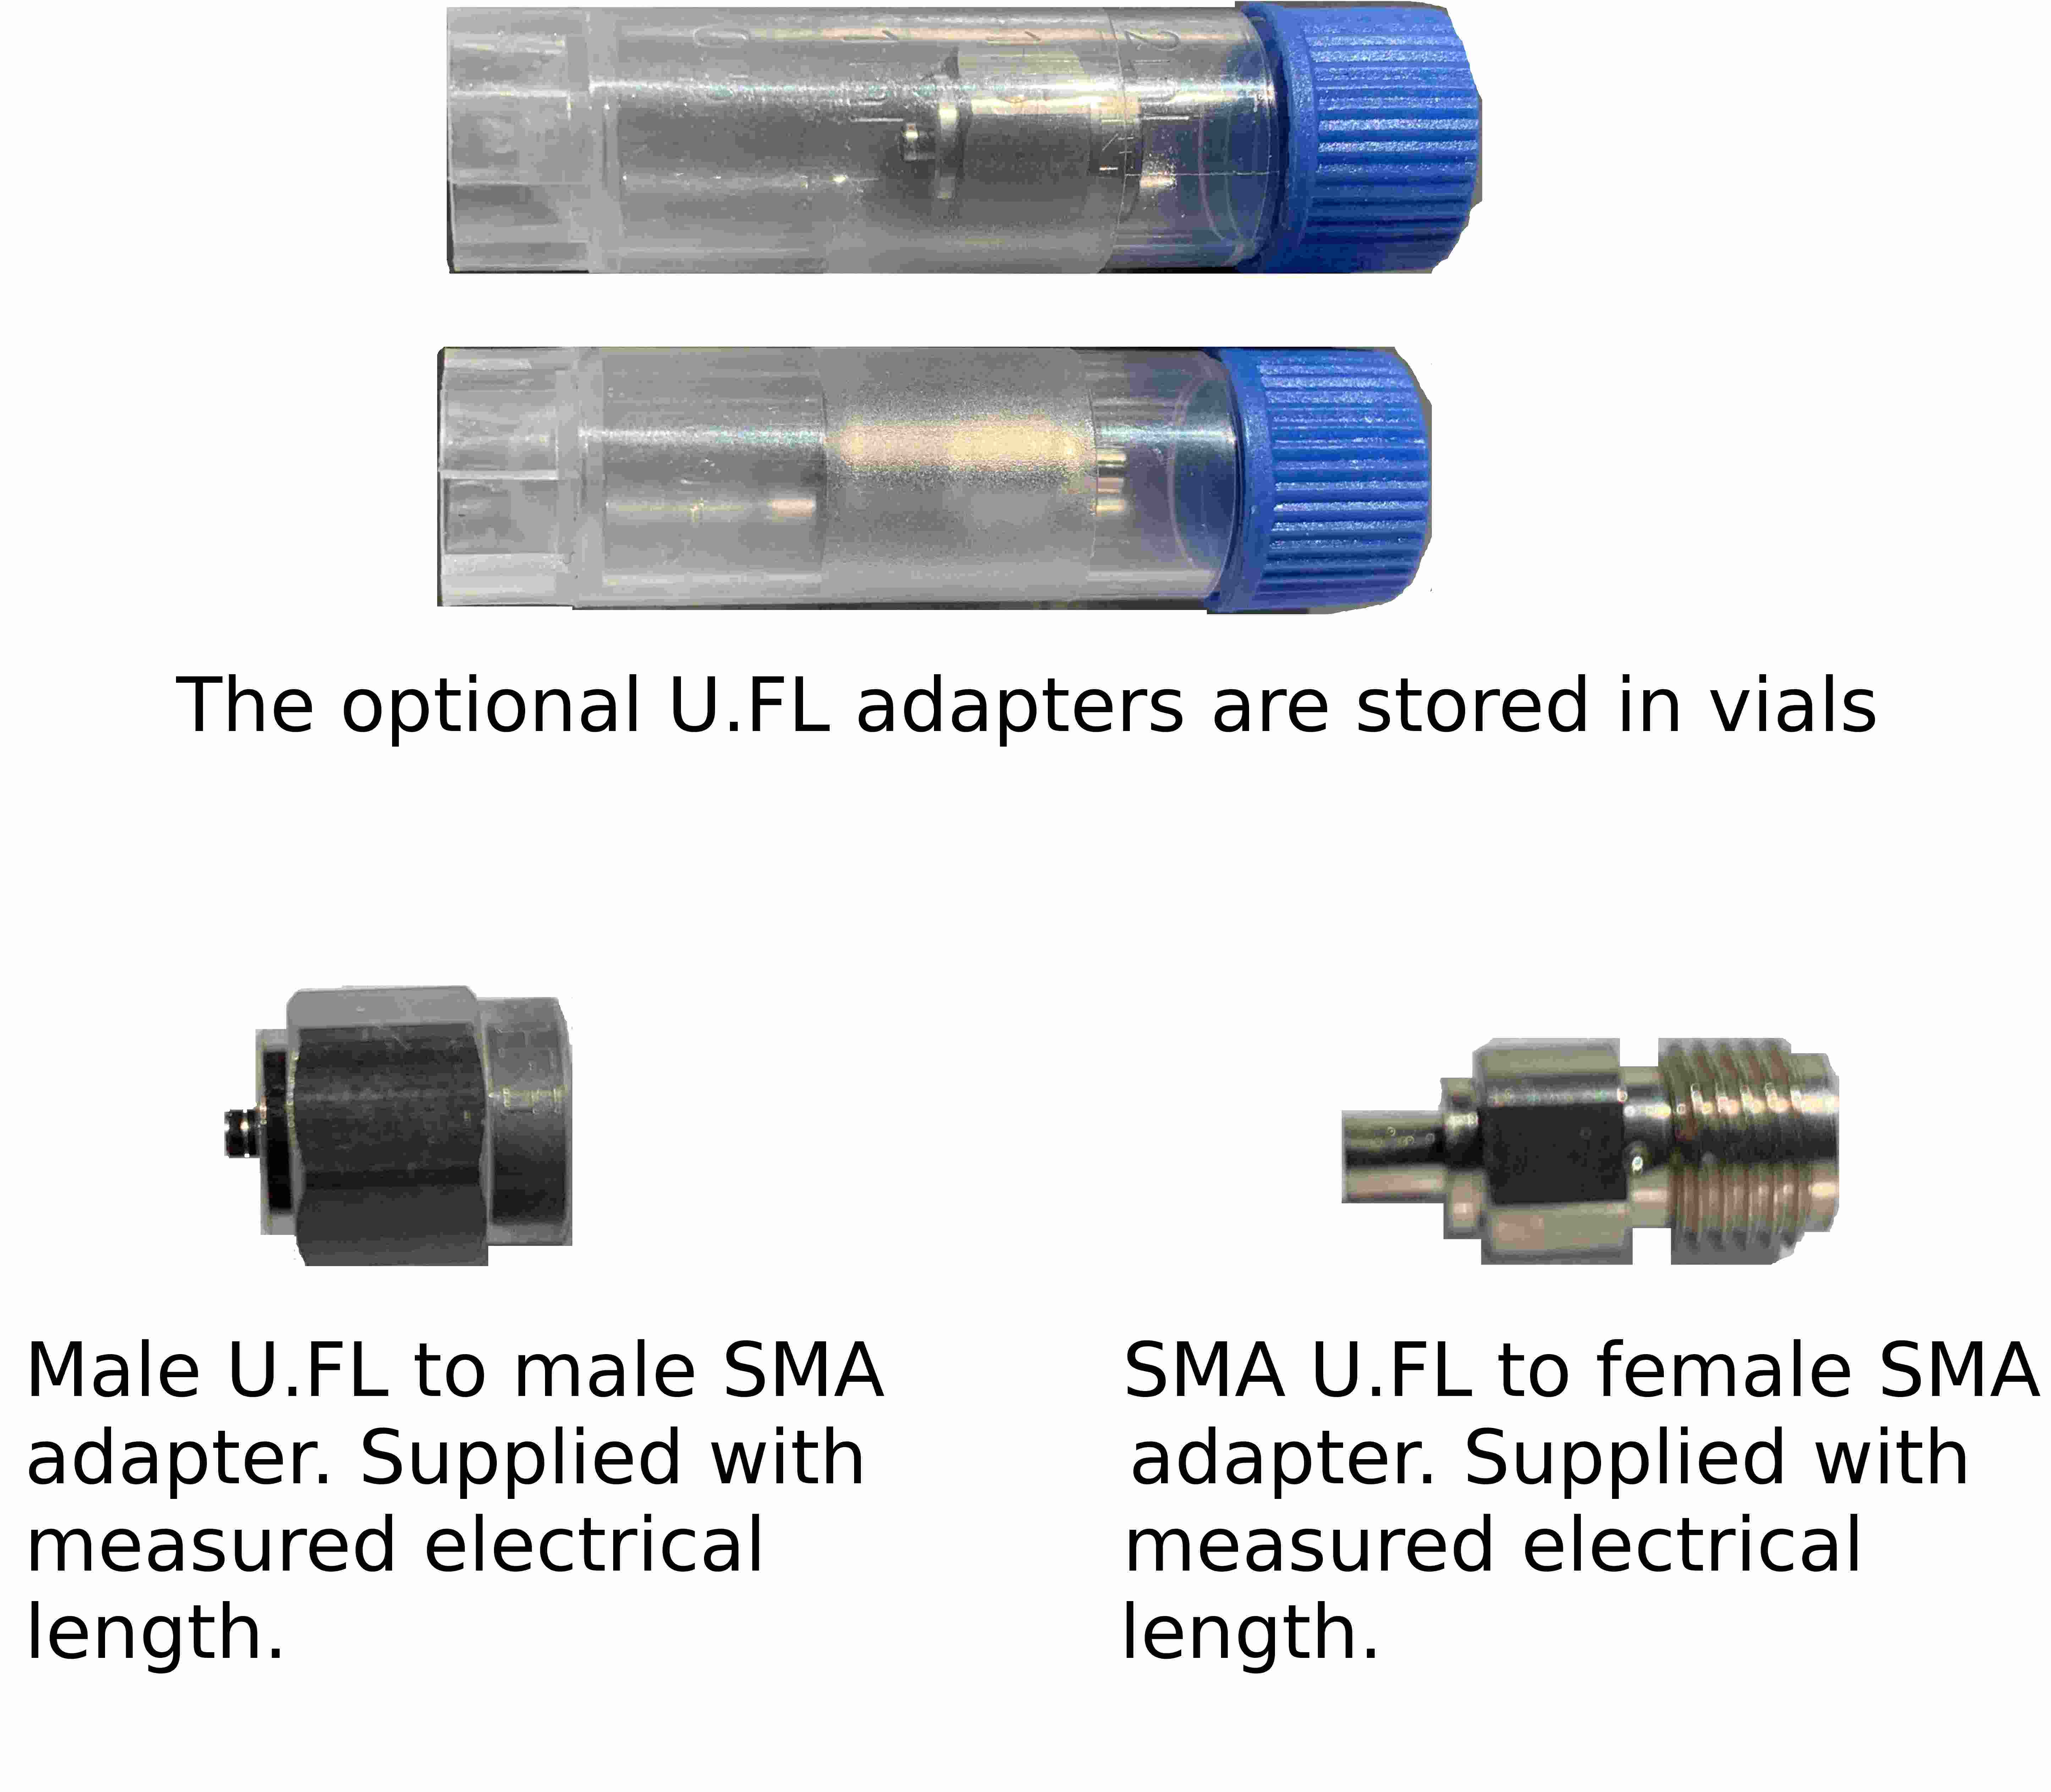 U.FL adapters for SMA calibration kit